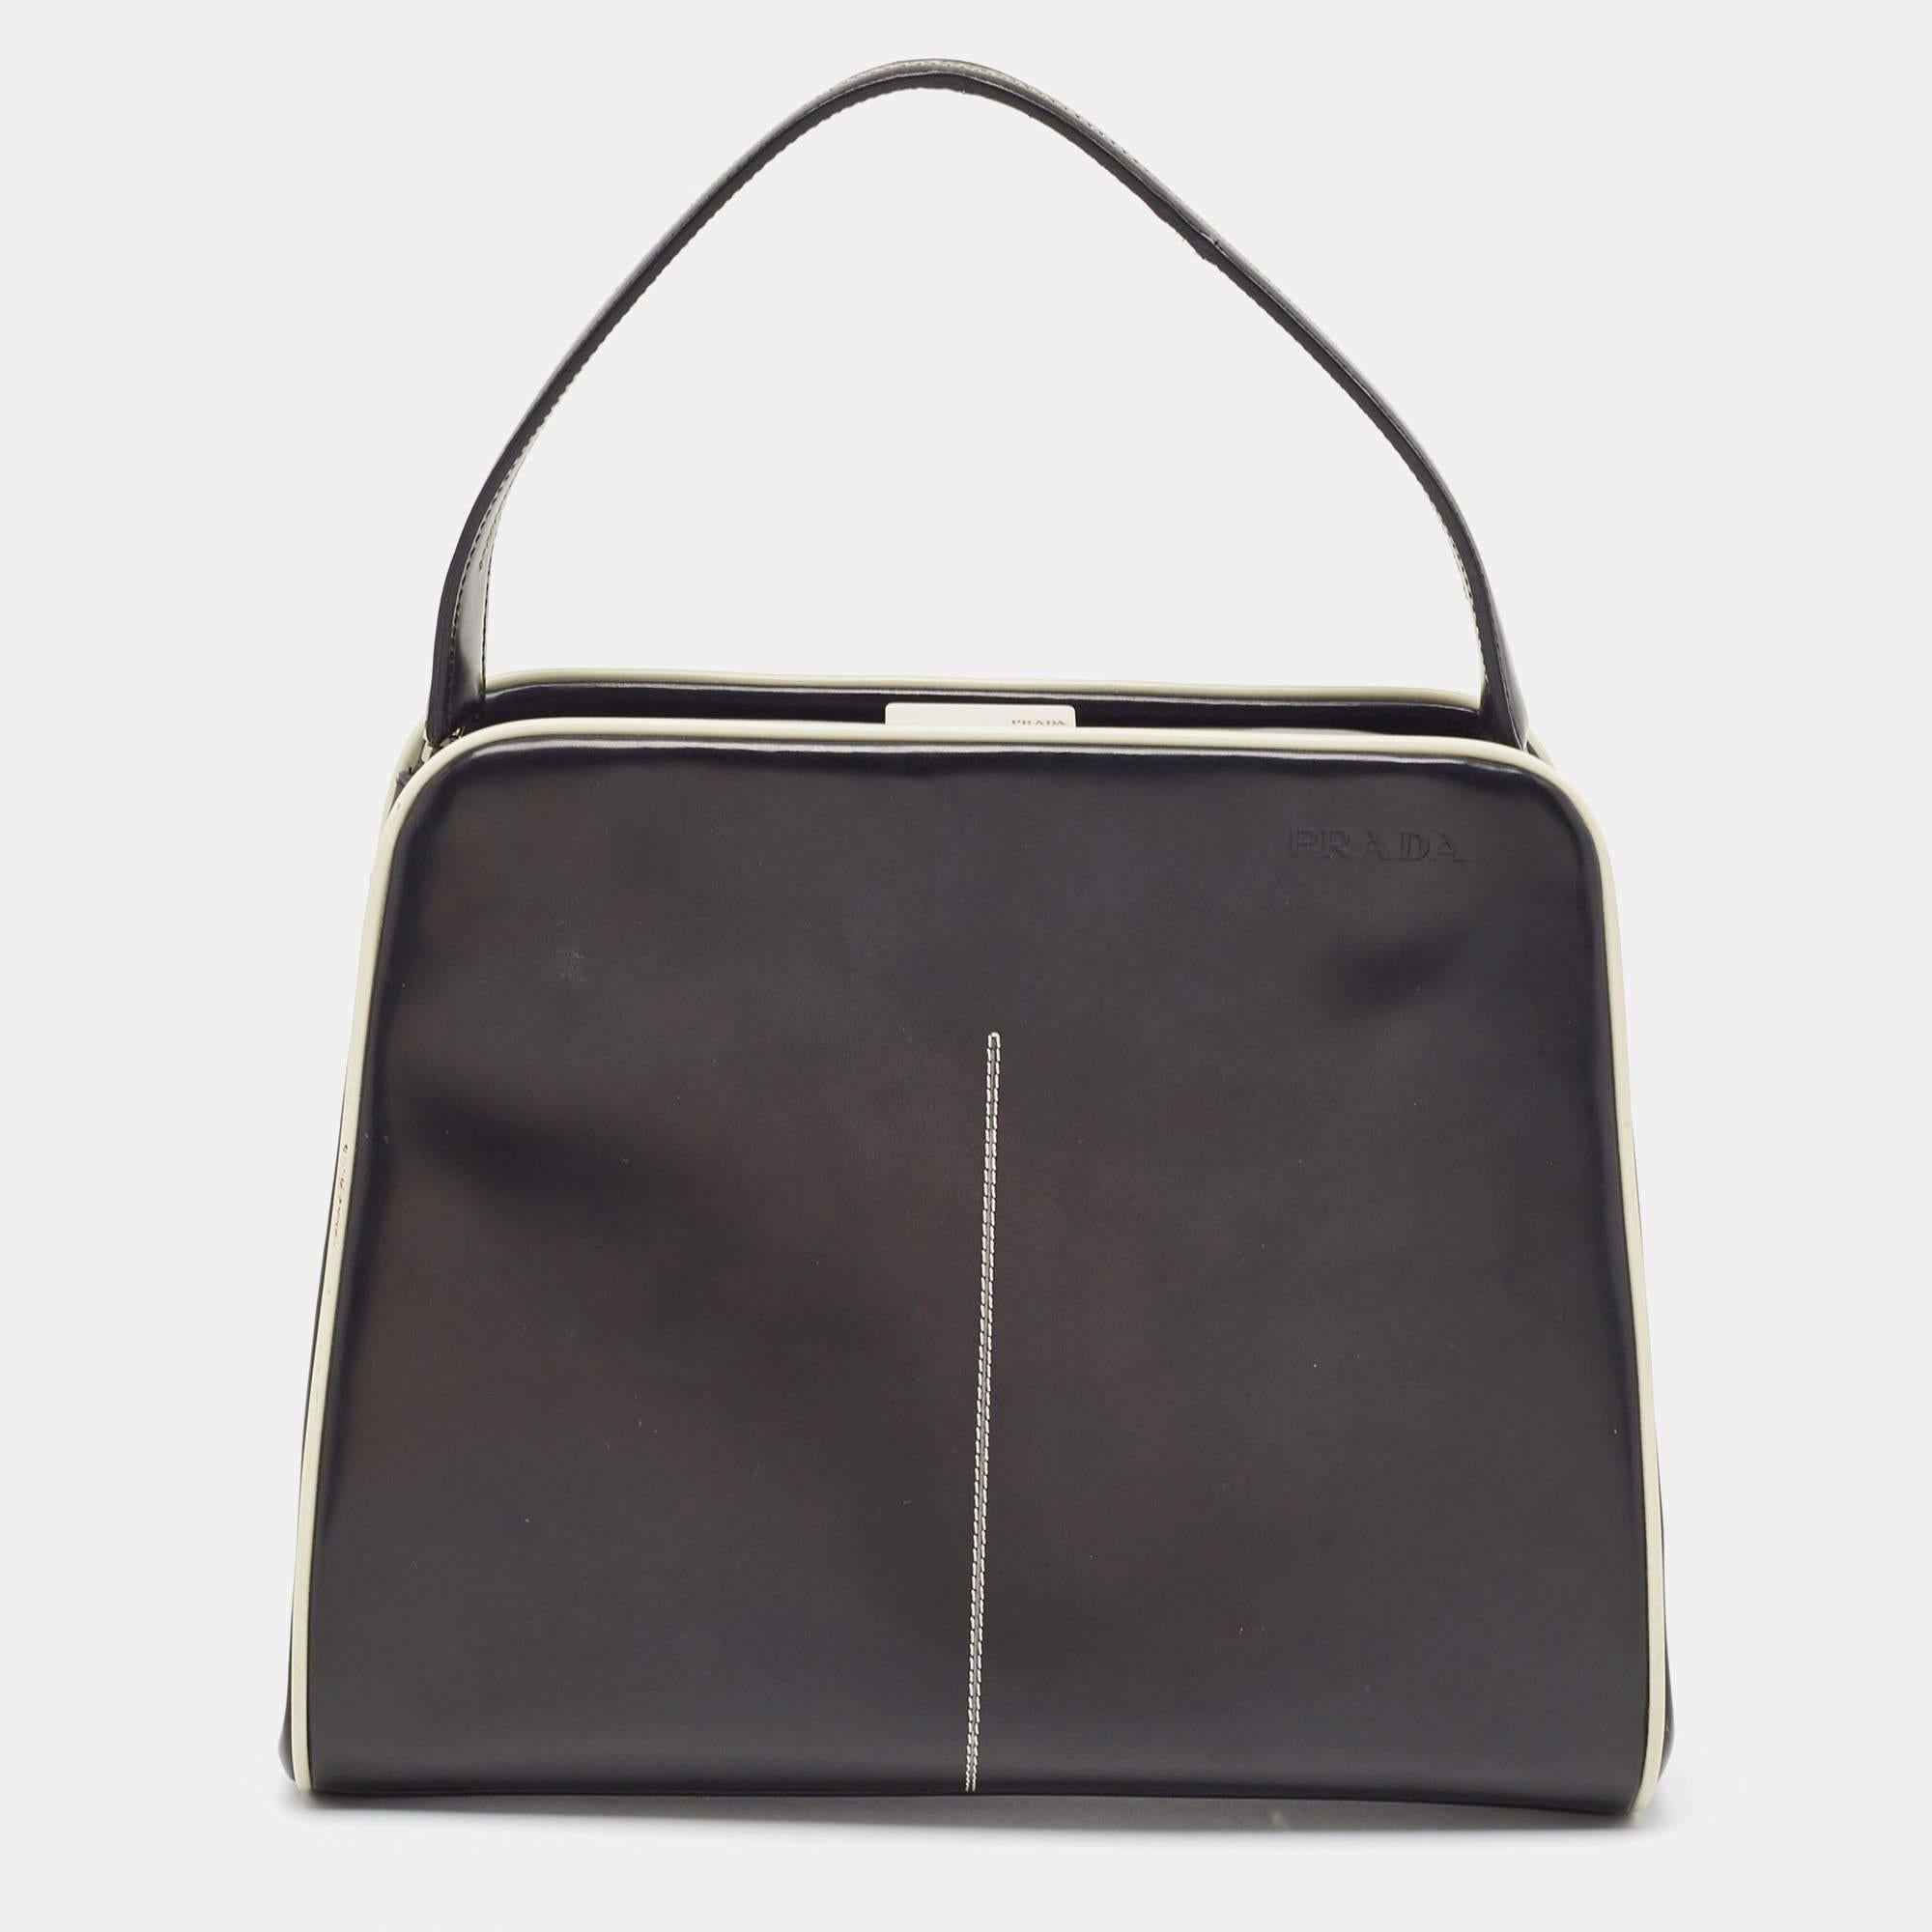 Prada Black/White Patent Leather Frame Top Handle Bag In Good Condition For Sale In Dubai, Al Qouz 2